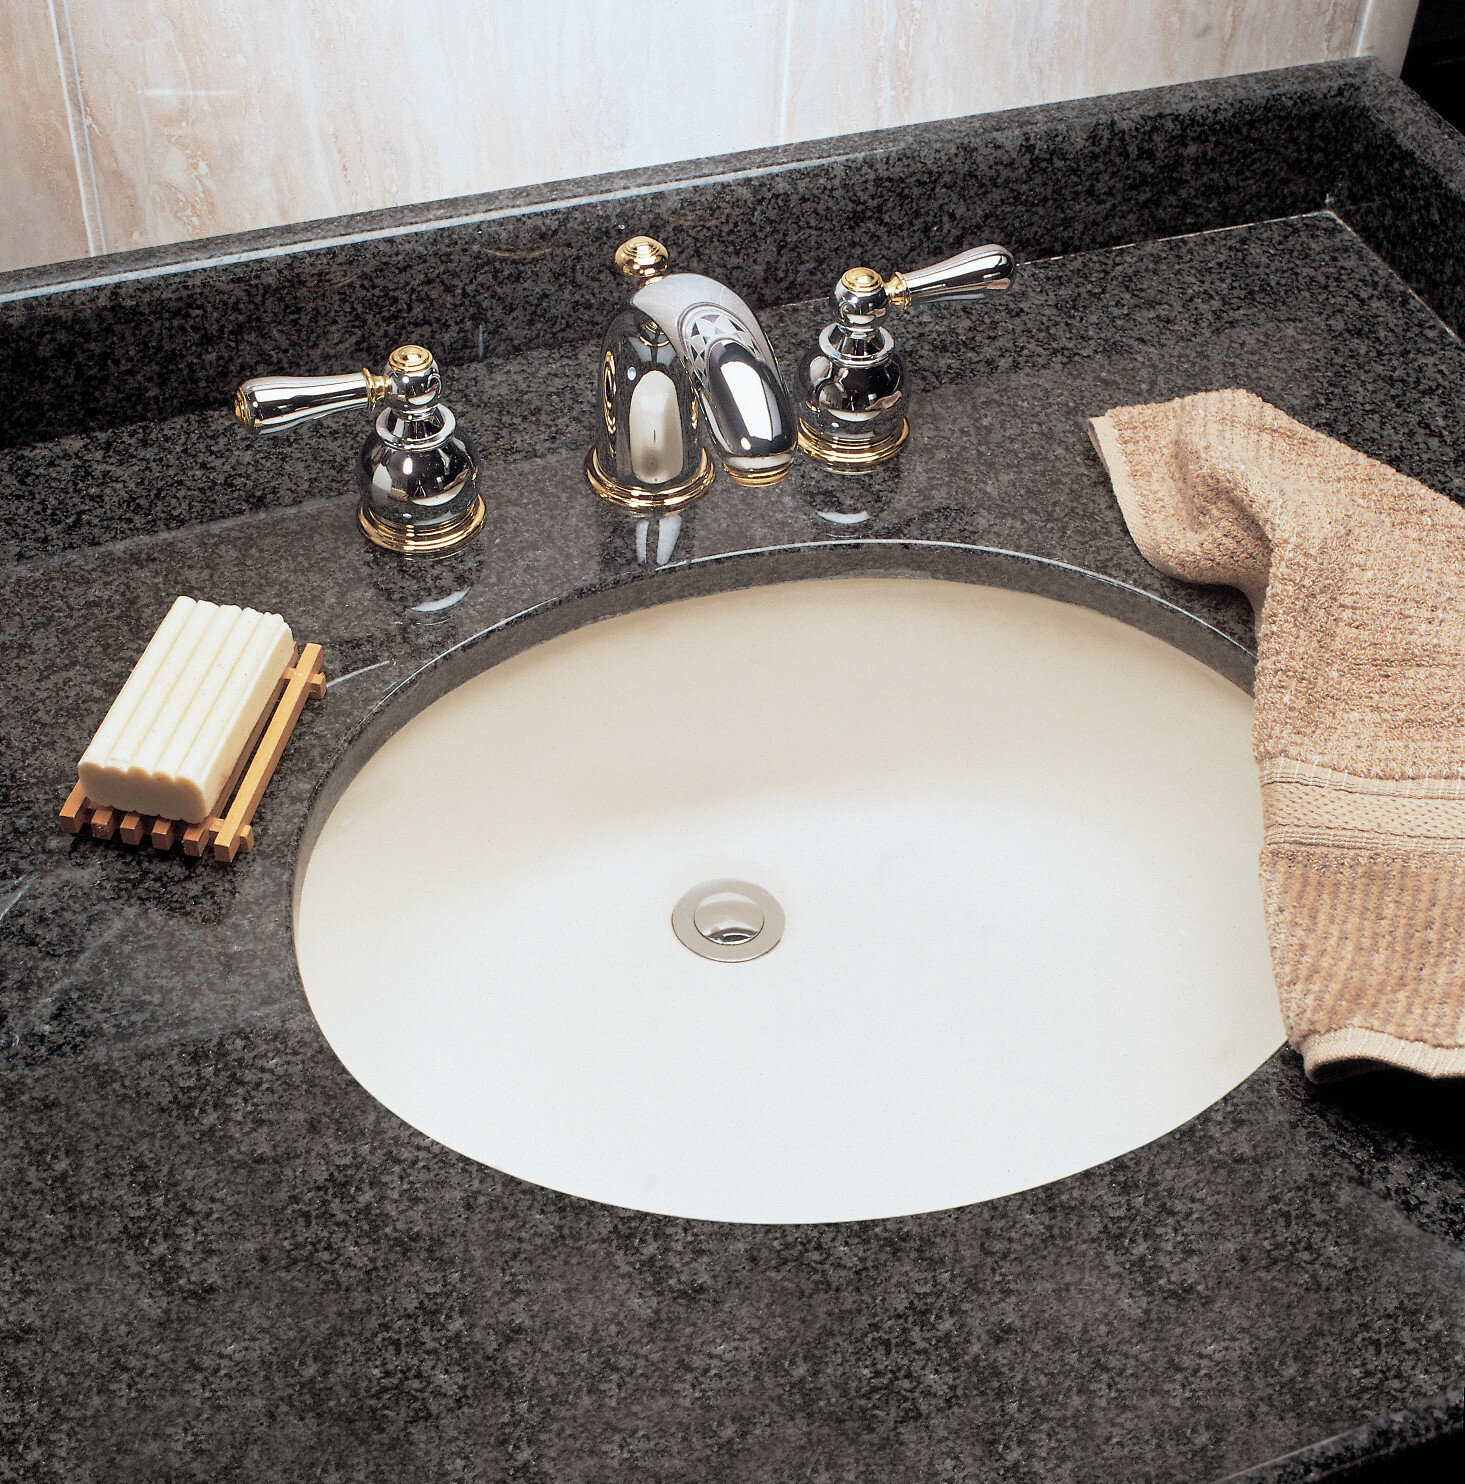 American Standard Ovalyn Ceramic Oval Undermount Bathroom Sink With Overflow Reviews Wayfair